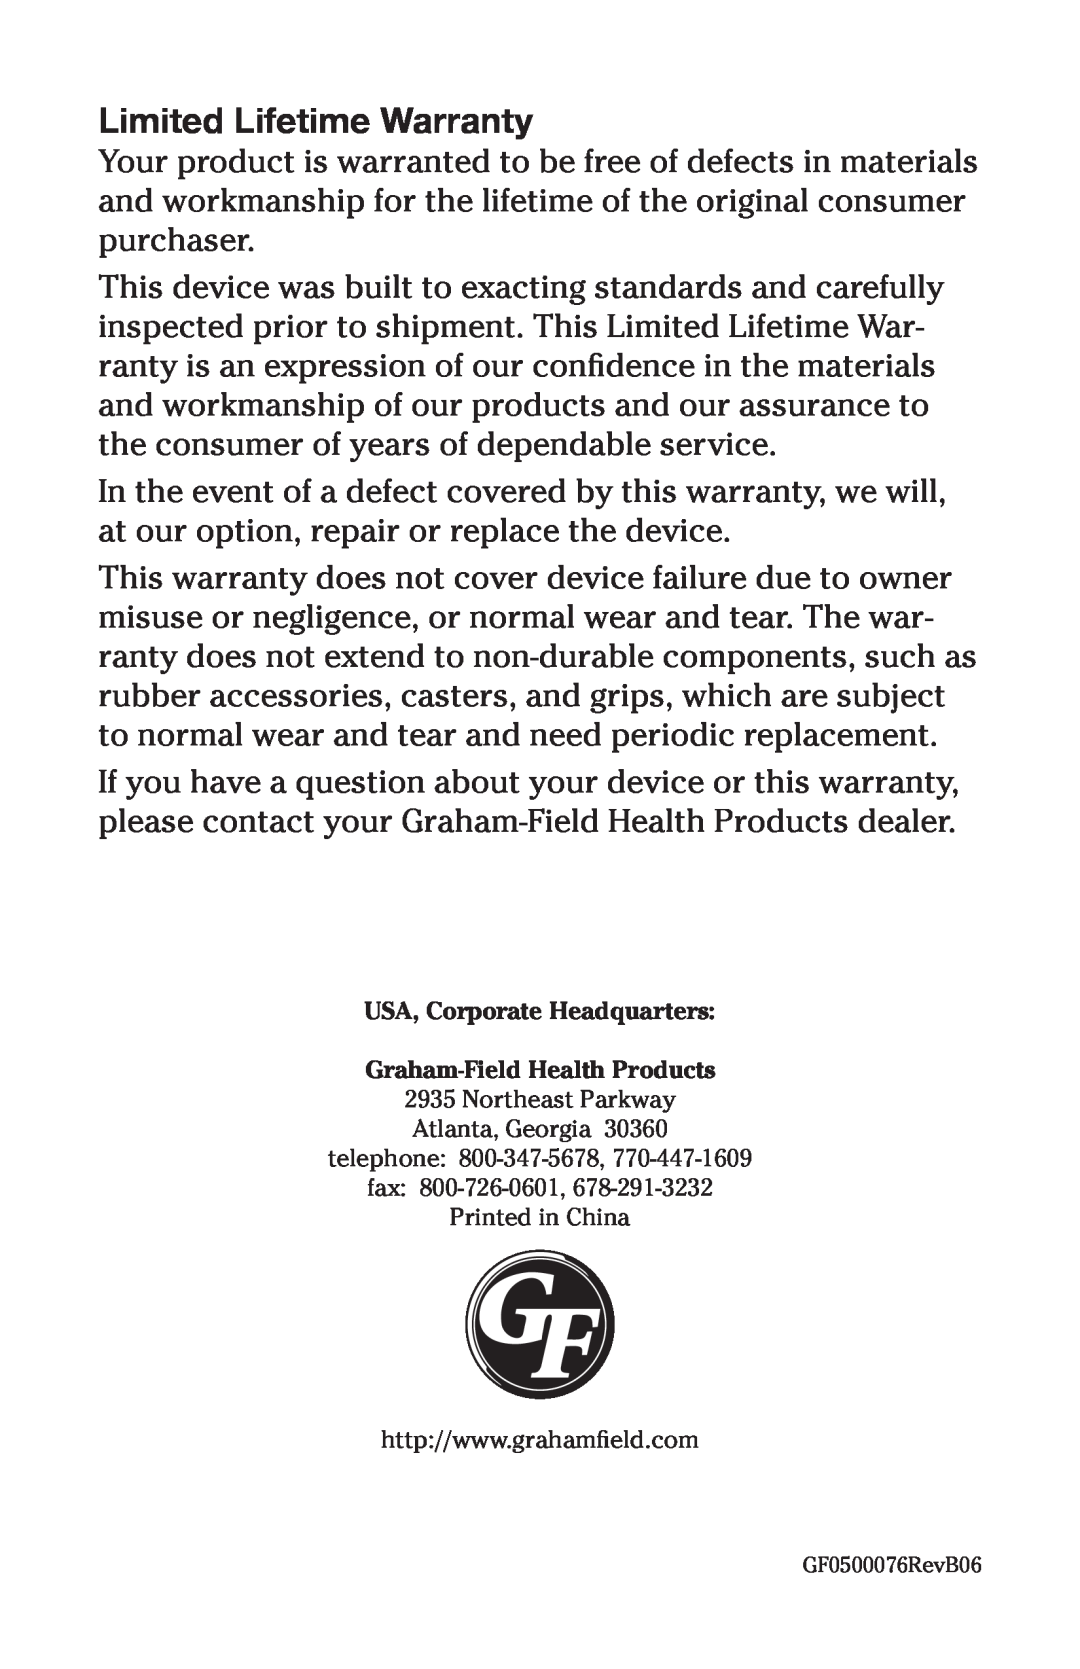 Graham Field JB0150-085, JB0150-086 Limited Lifetime Warranty, USA, Corporate Headquarters Graham-Field Health Products 